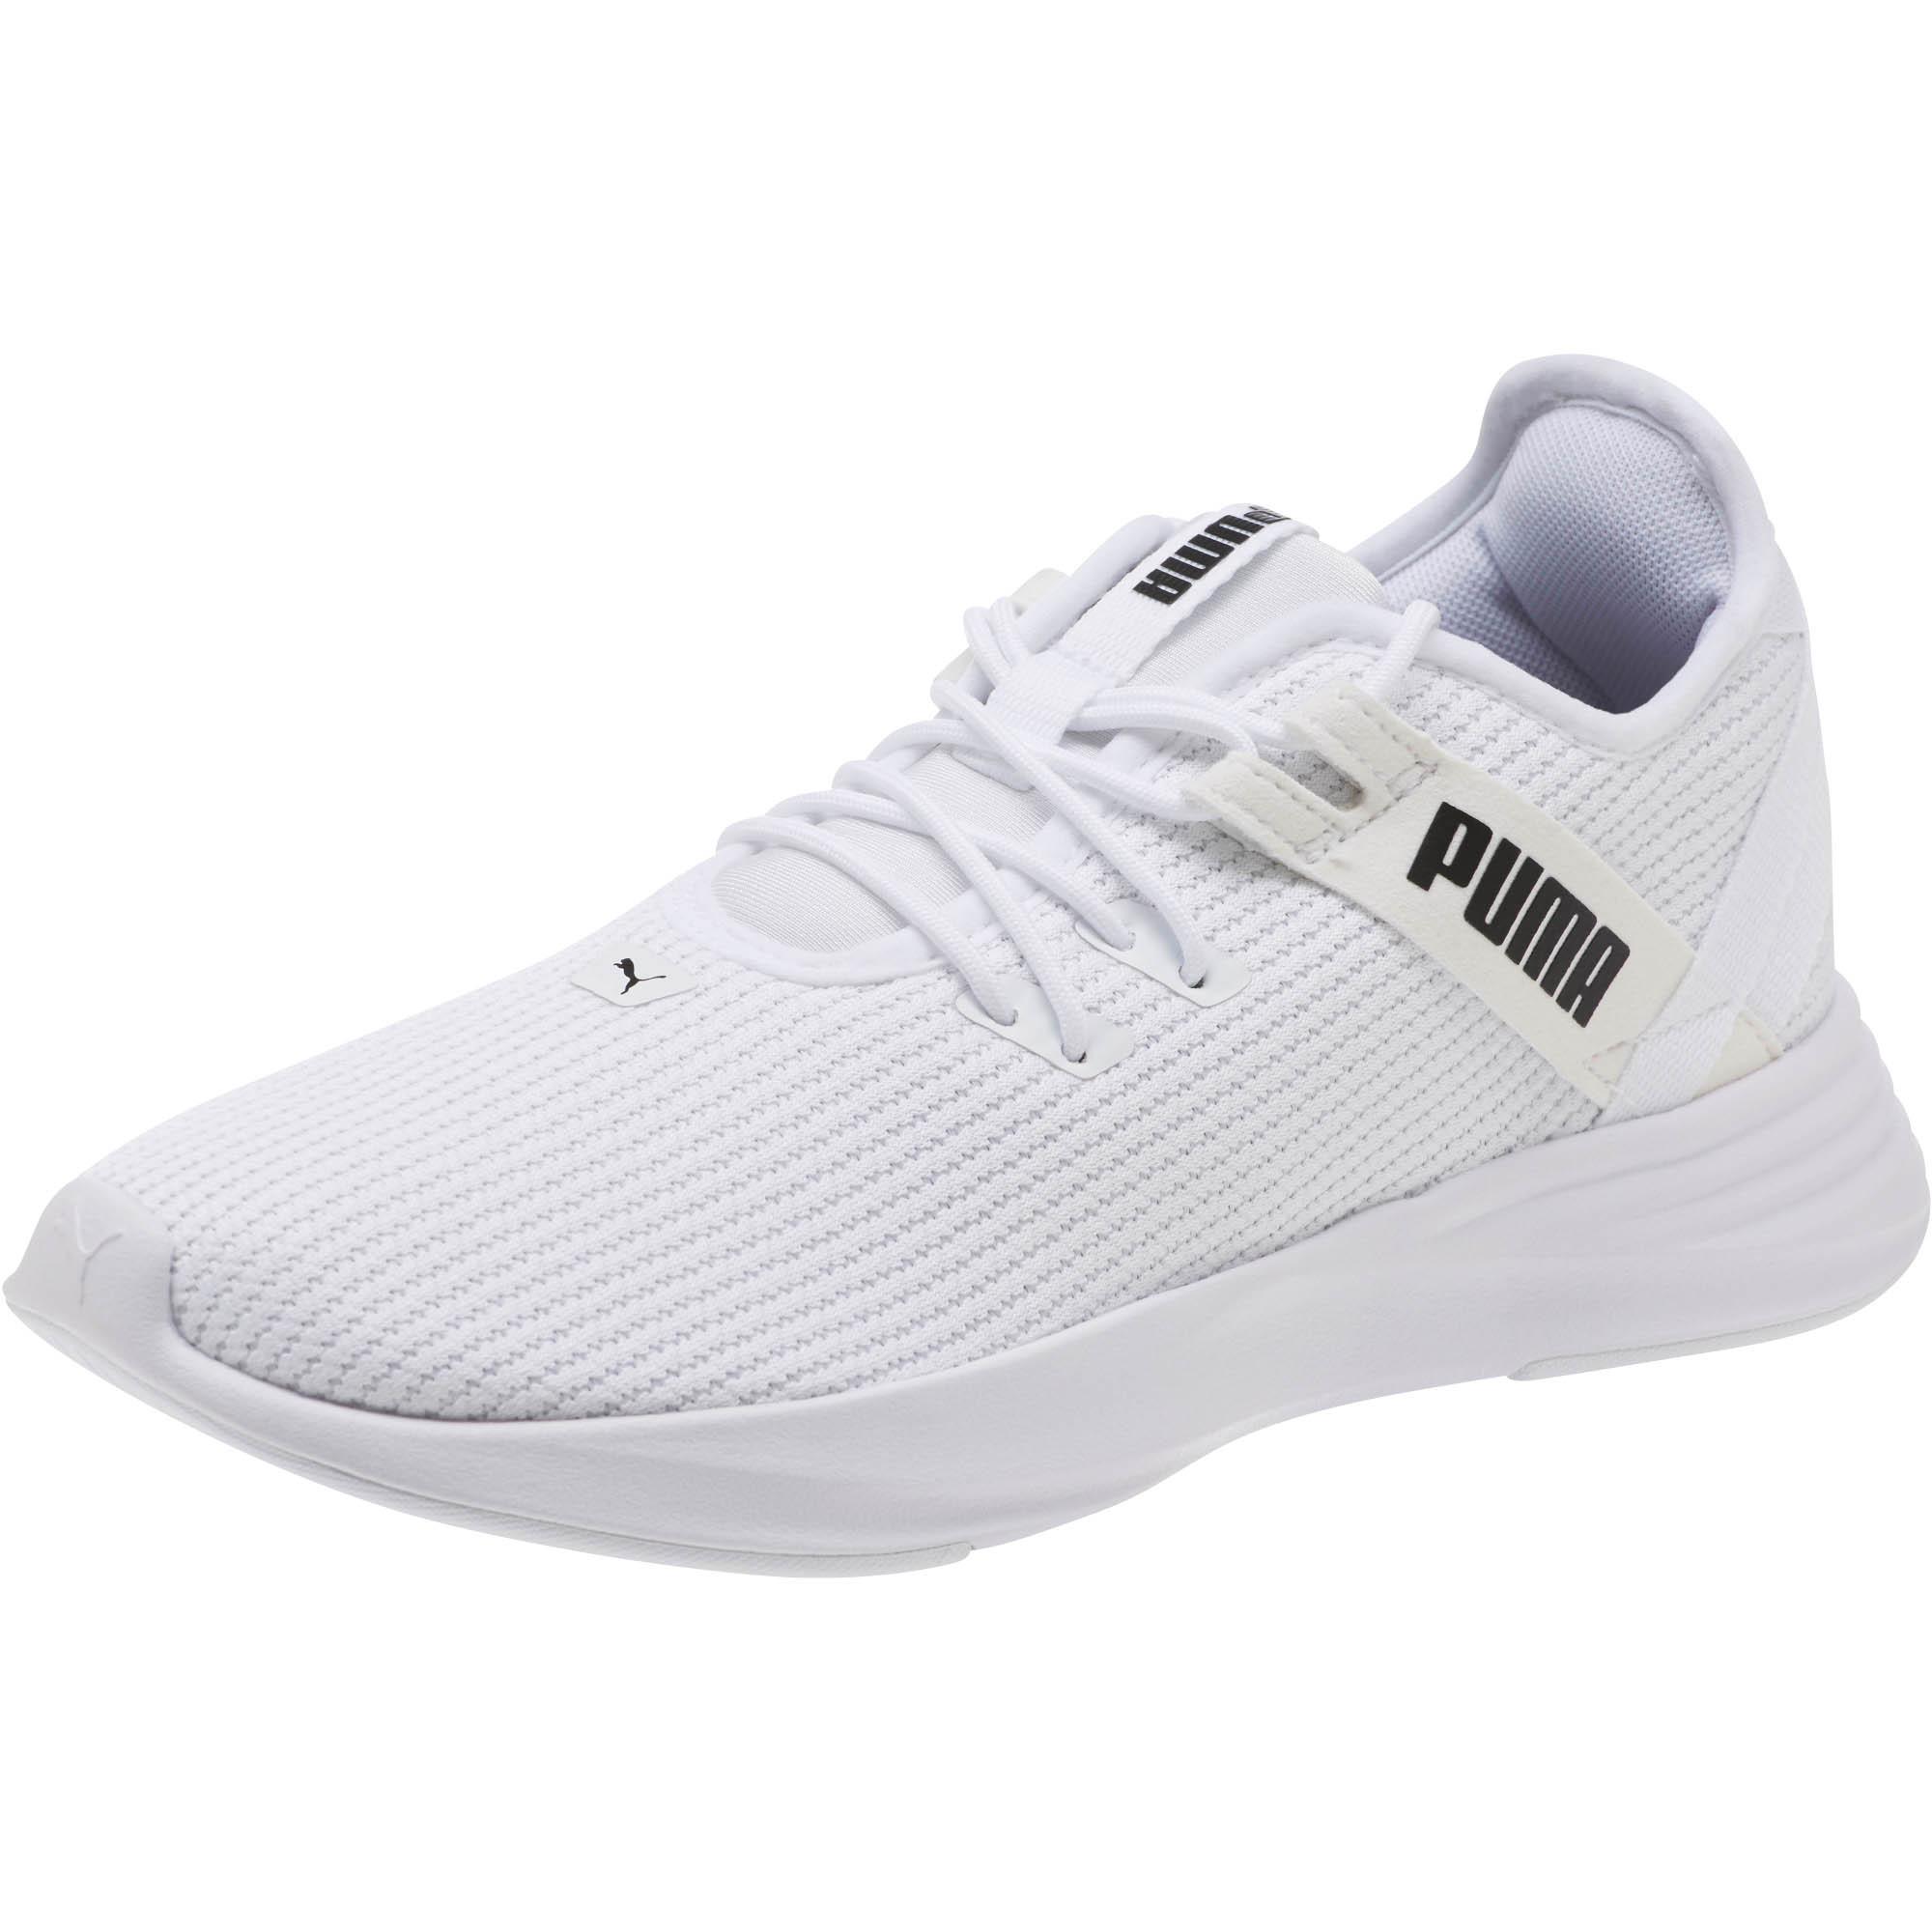 PUMA Radiate Xt Women's Training Shoes in White | Lyst